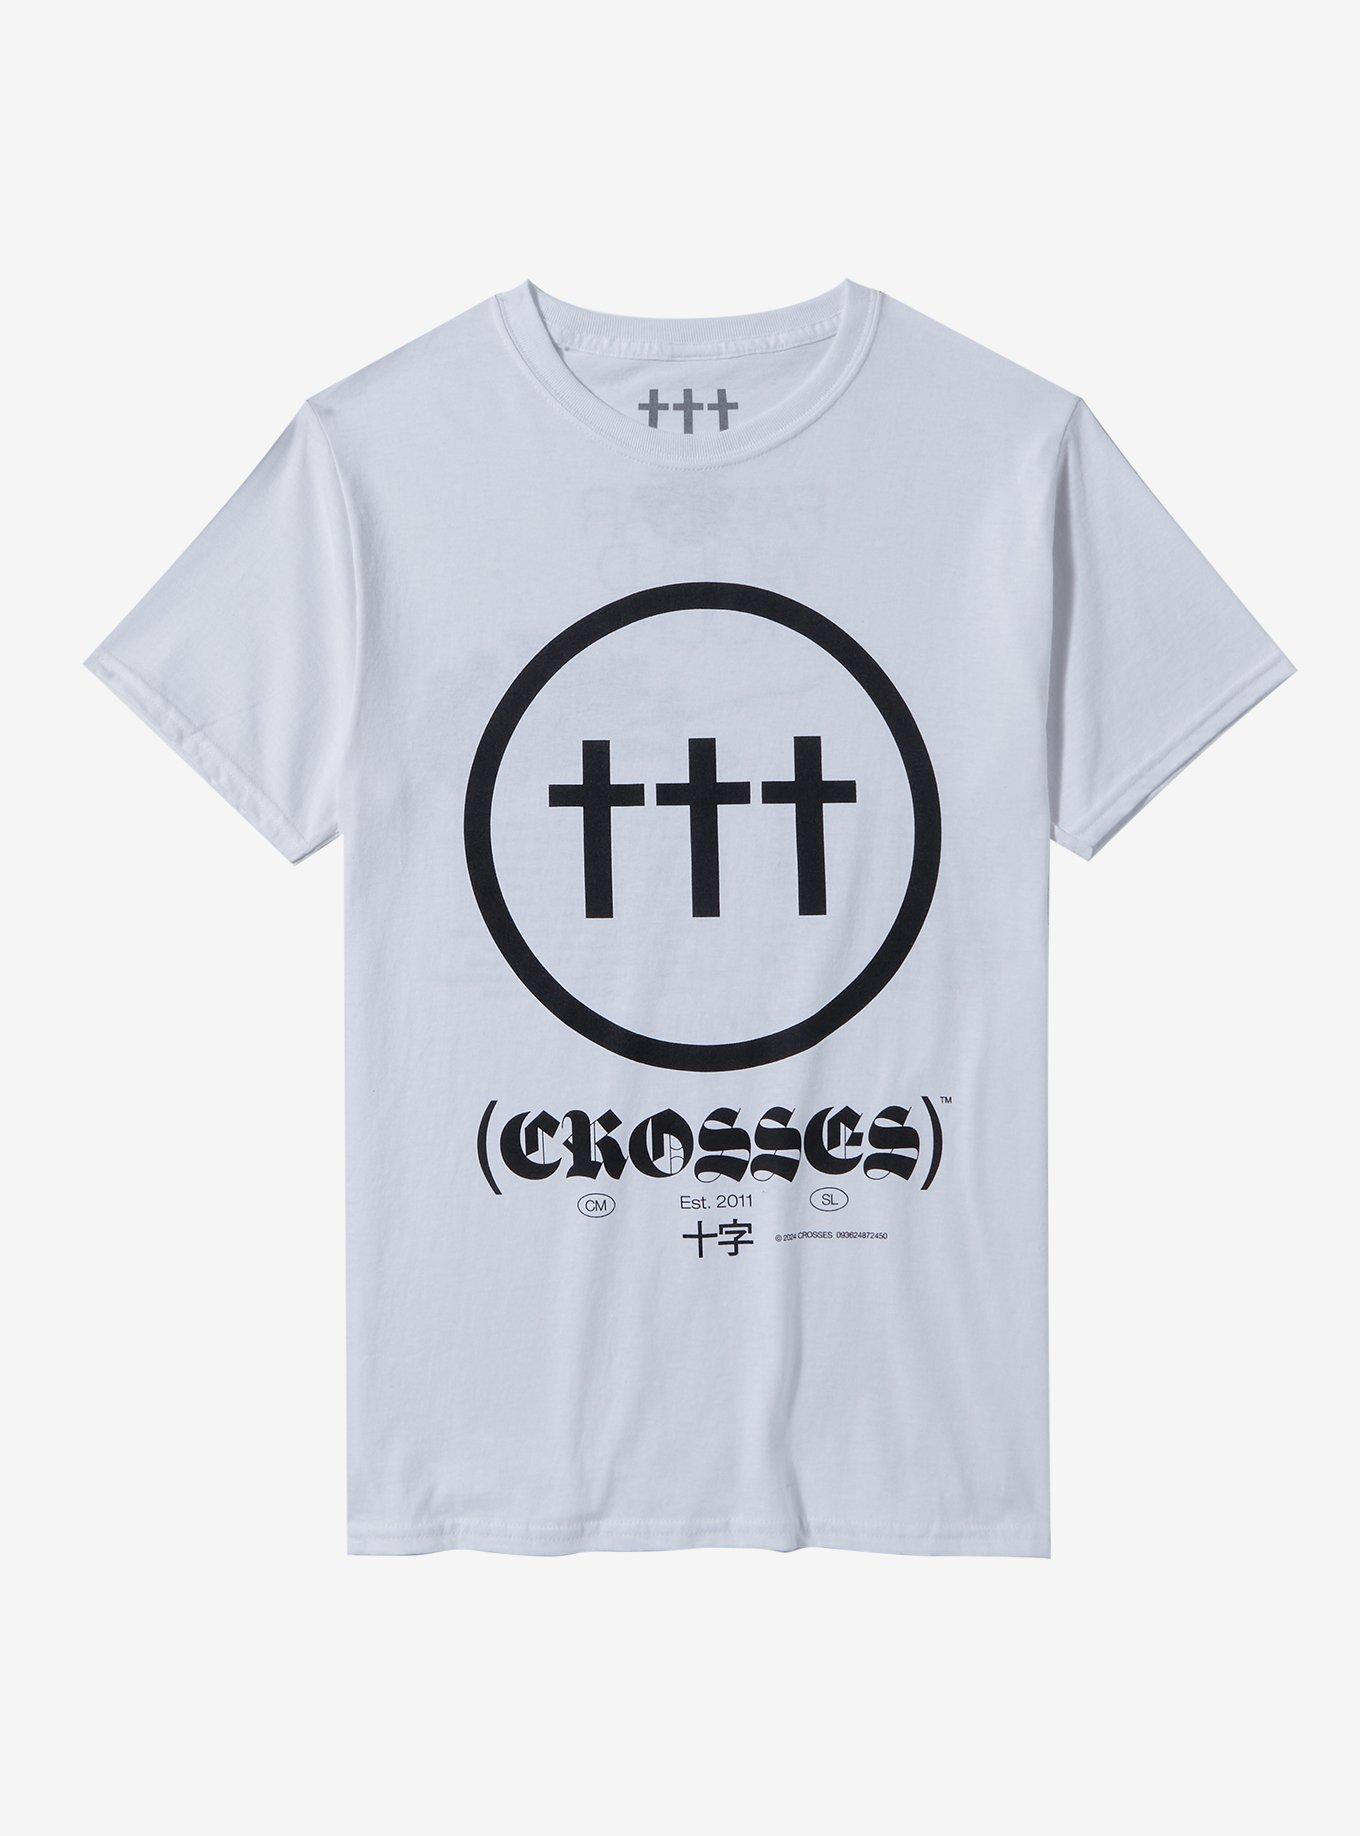 Crosses Logo Tour Boyfriend Fit Girls T-Shirt, BRIGHT WHITE, hi-res